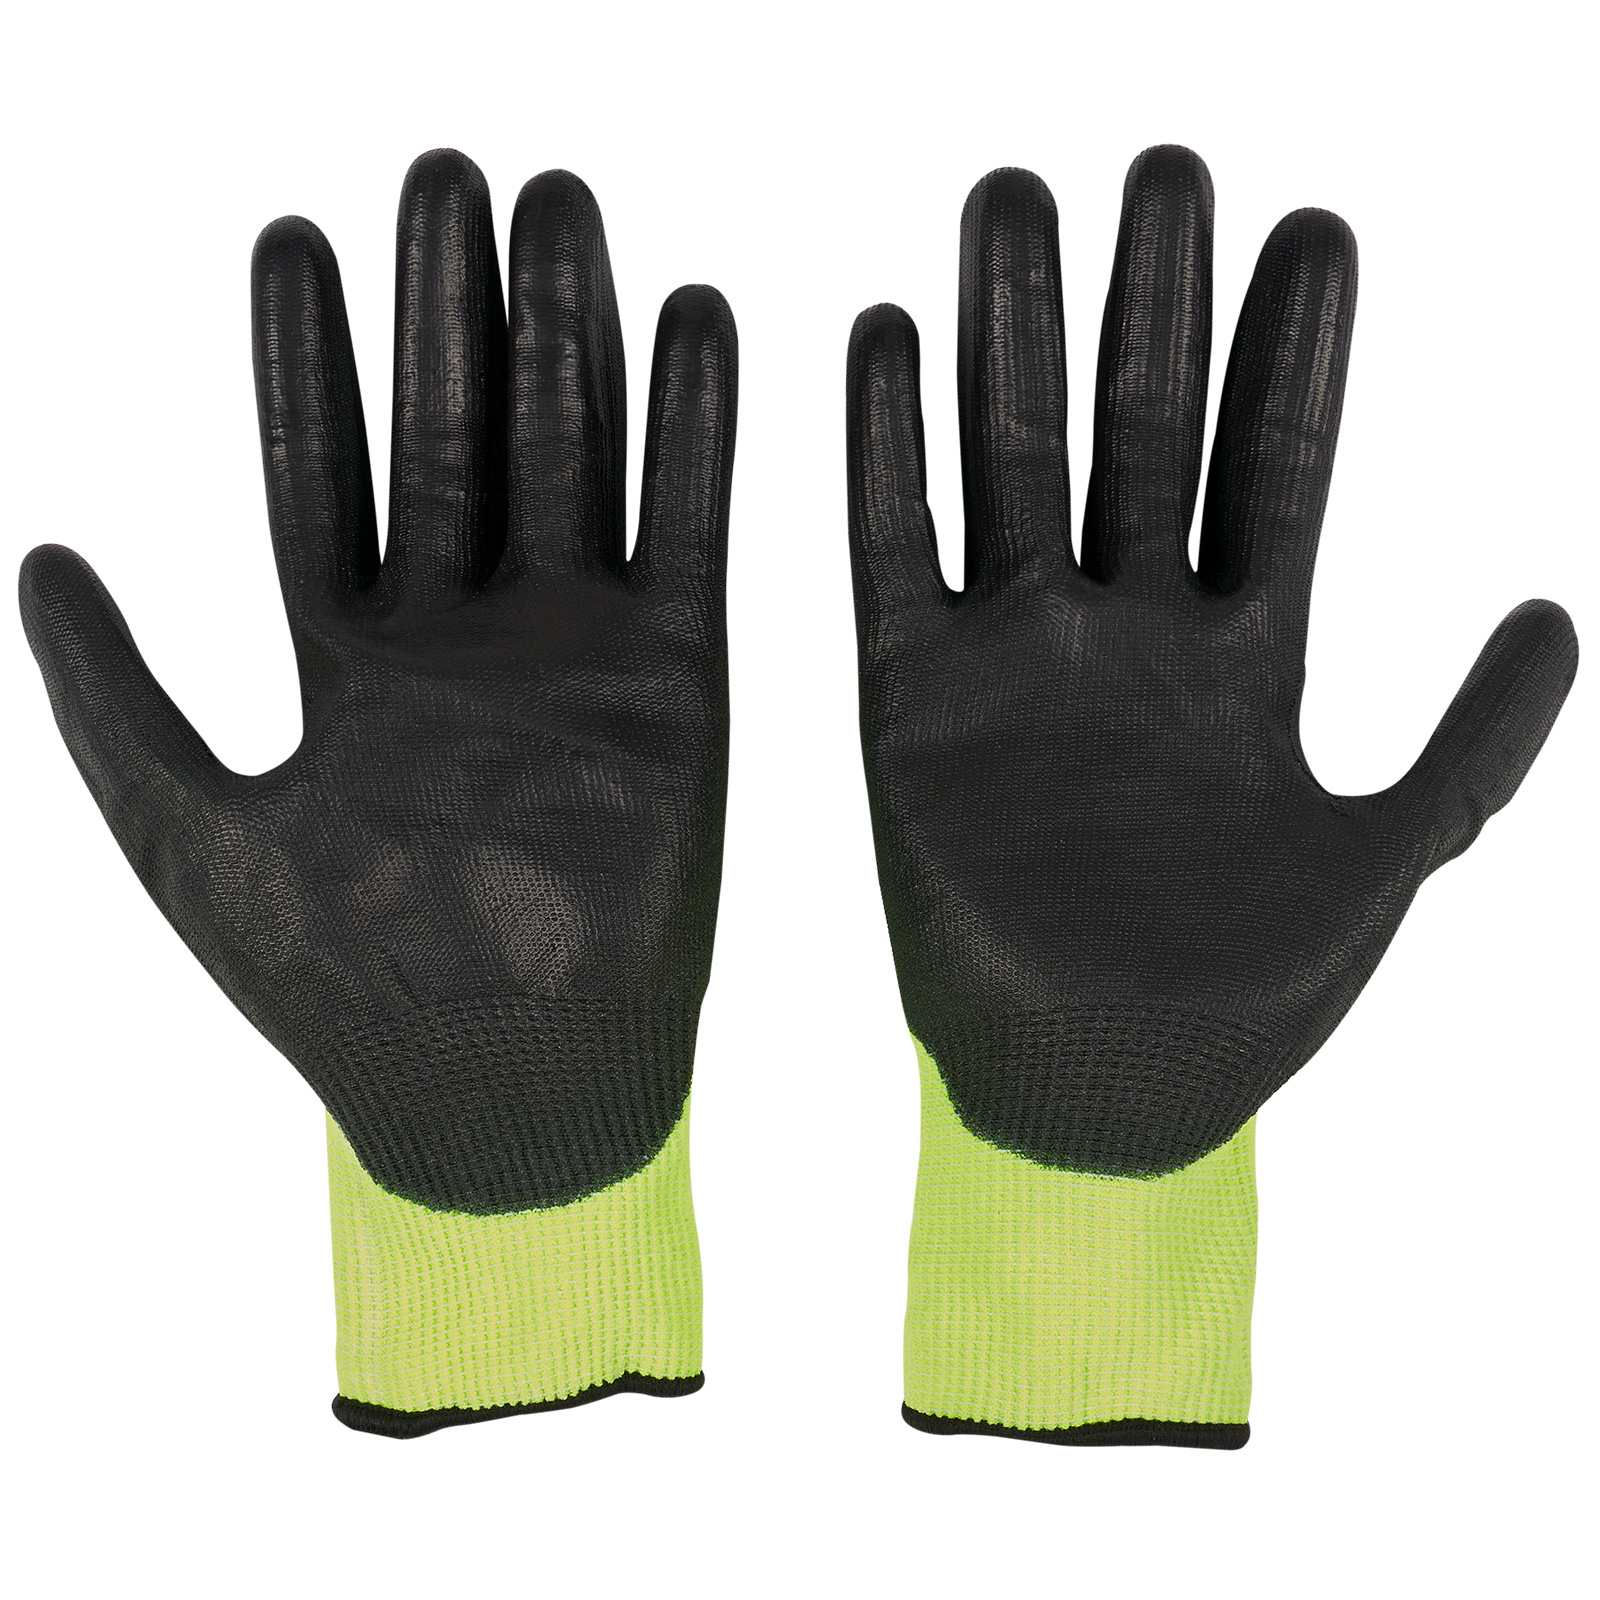 MILWAUKEE Cut 3 Dipped Gloves - M 